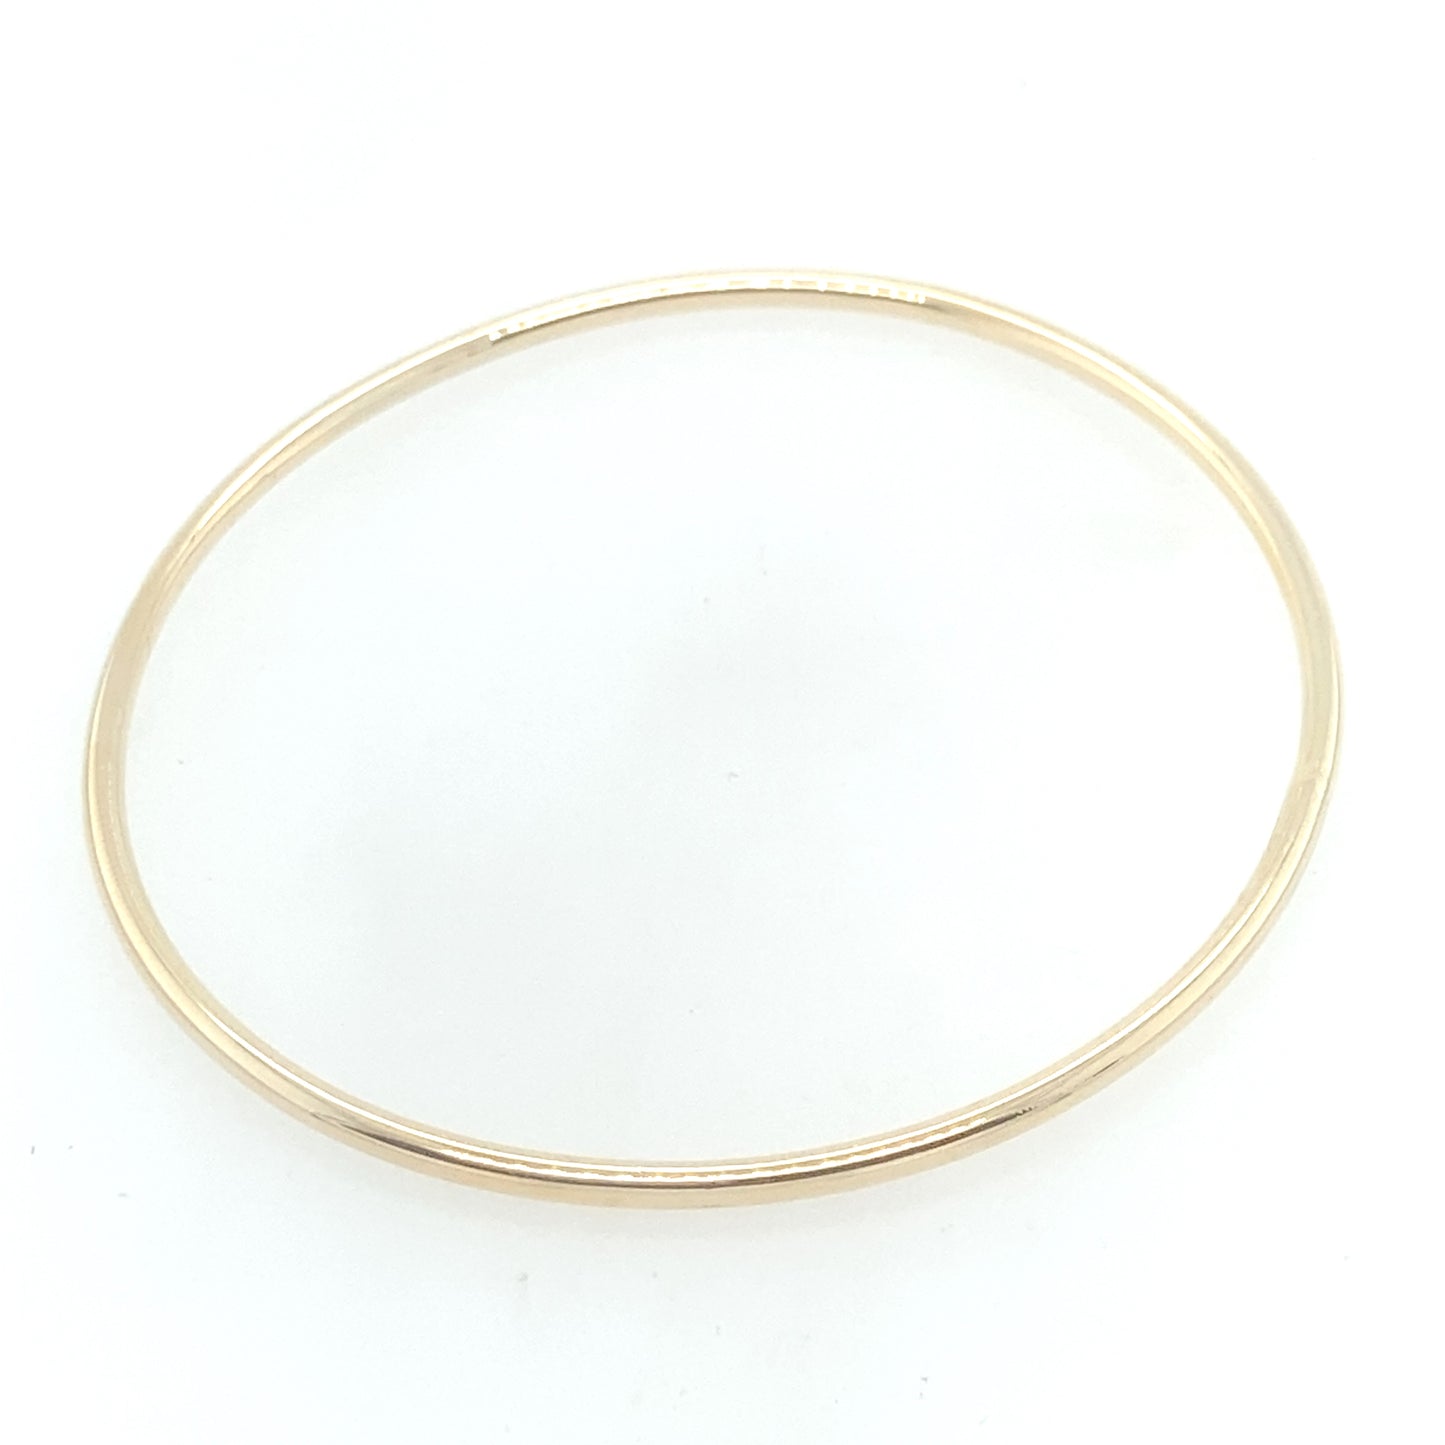 14 k yellow gold bracelet. The bracelet shape is circle.